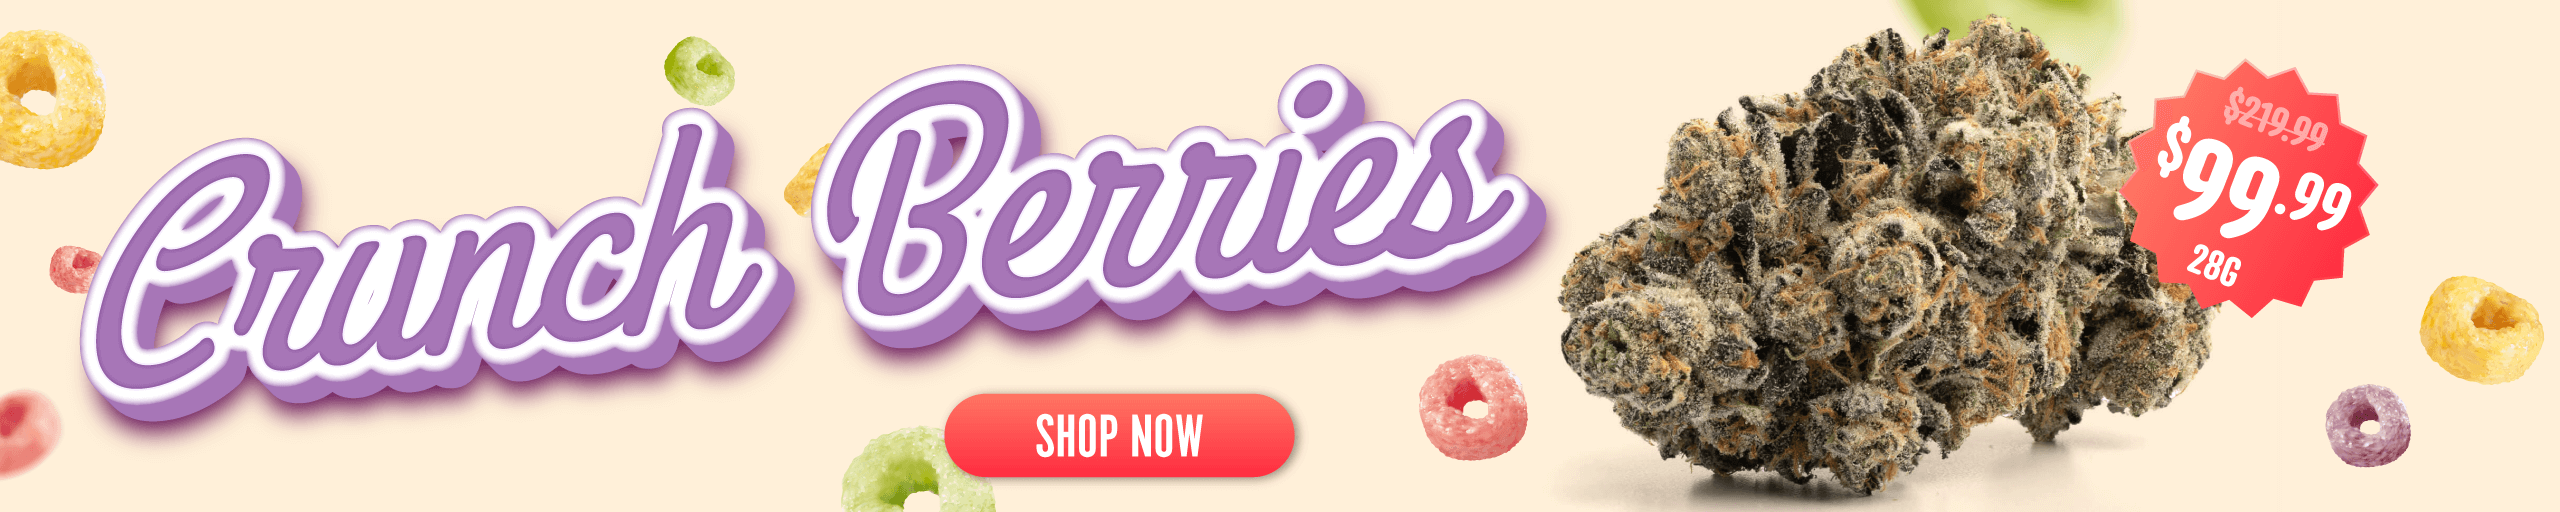 Crunch Berries Web